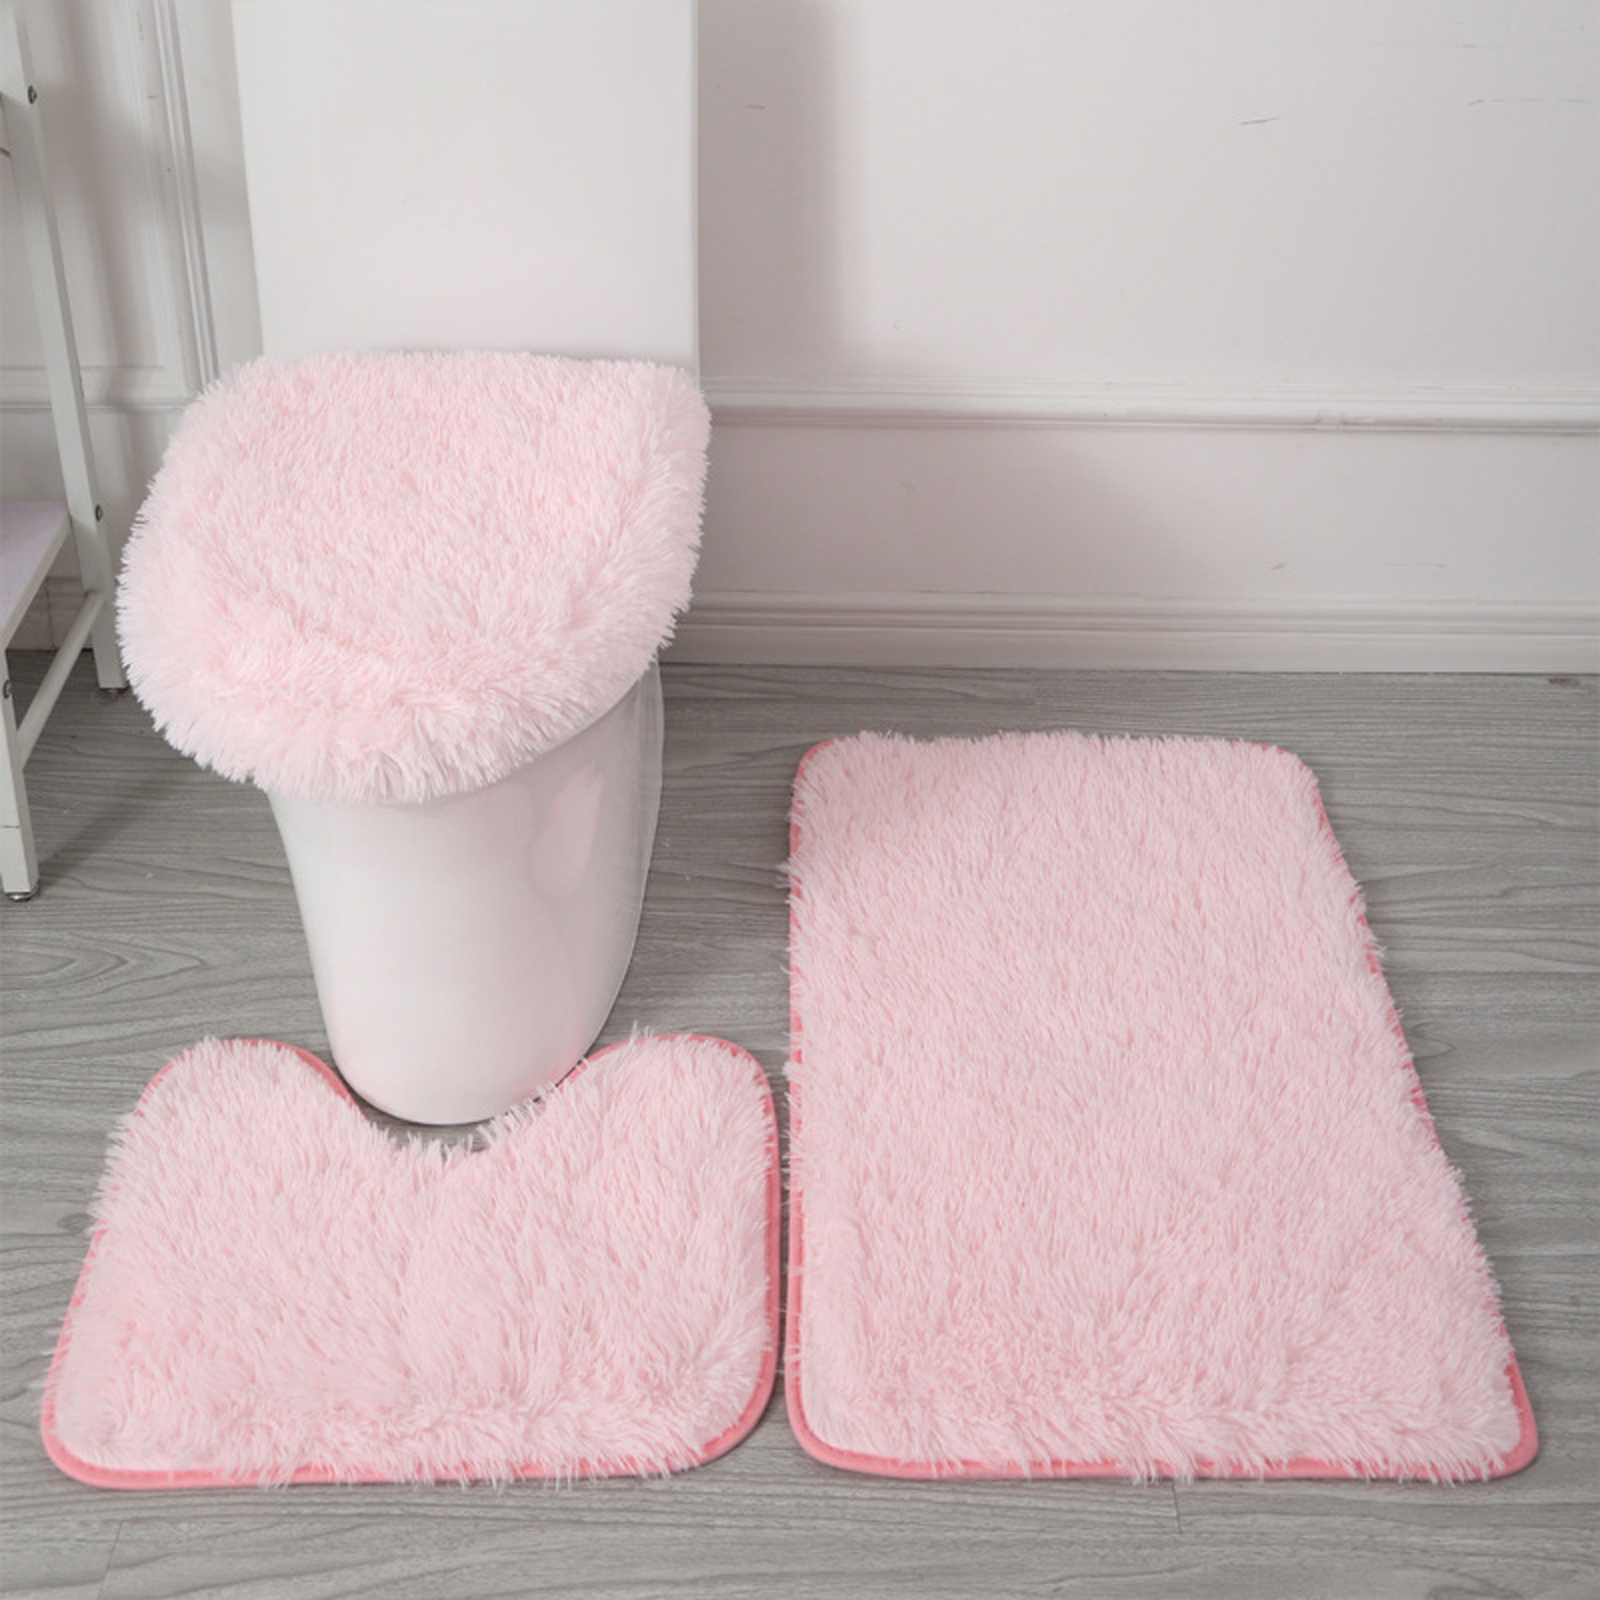 3 Pcs/Set Bathroom Rug Set Contour Bath Rug Toilet Lid Cover - Light Pink - image 1 of 5